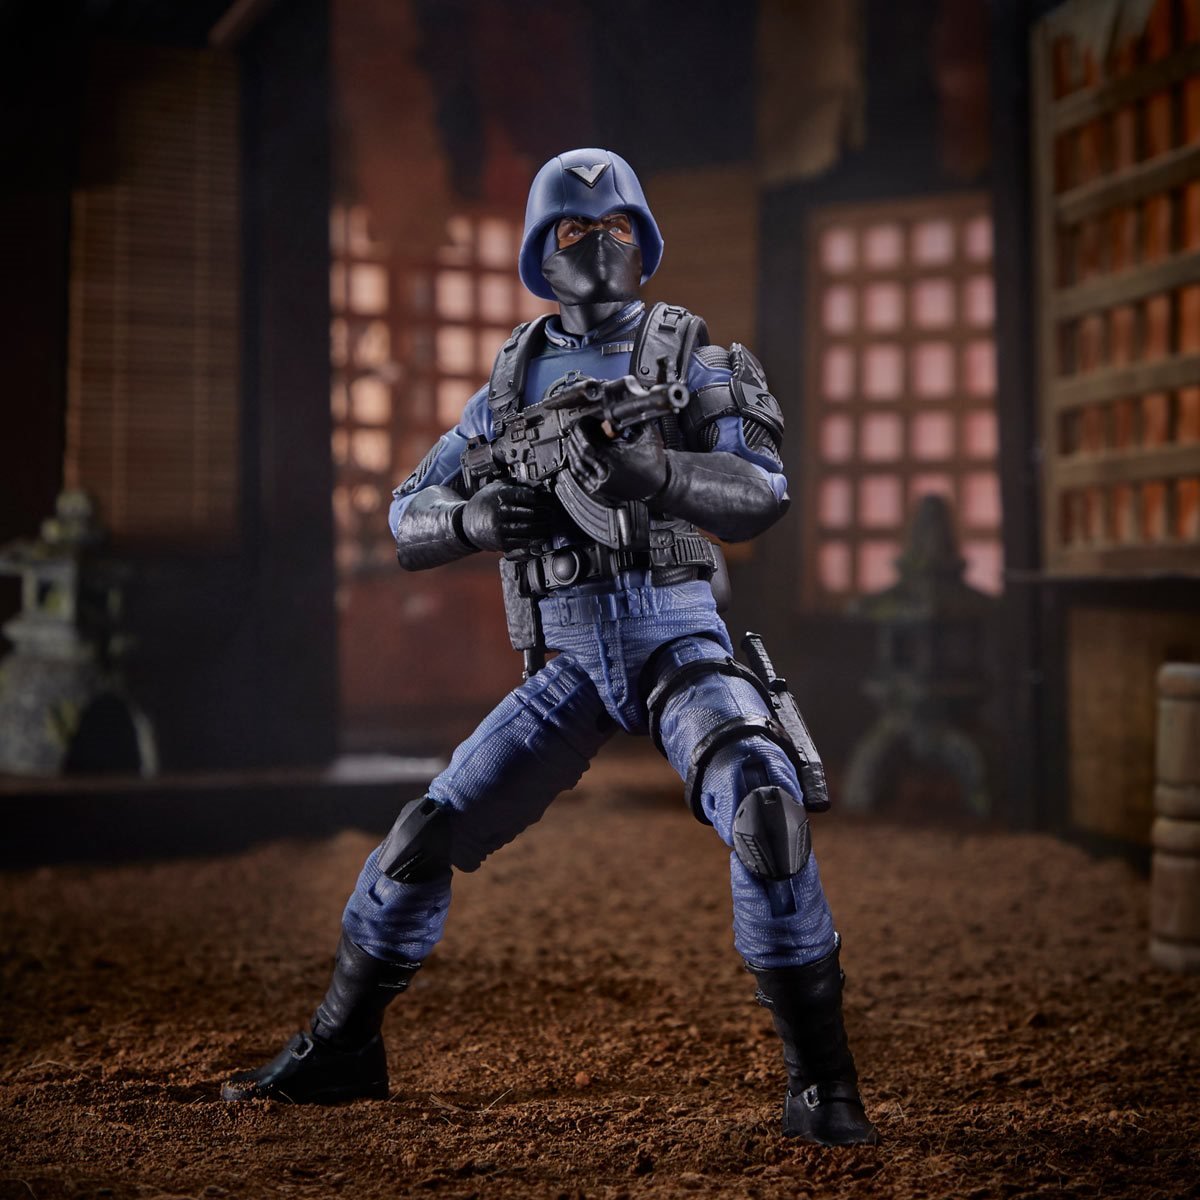 G.I. Joe Classified Series Cobra Officer Hasbro